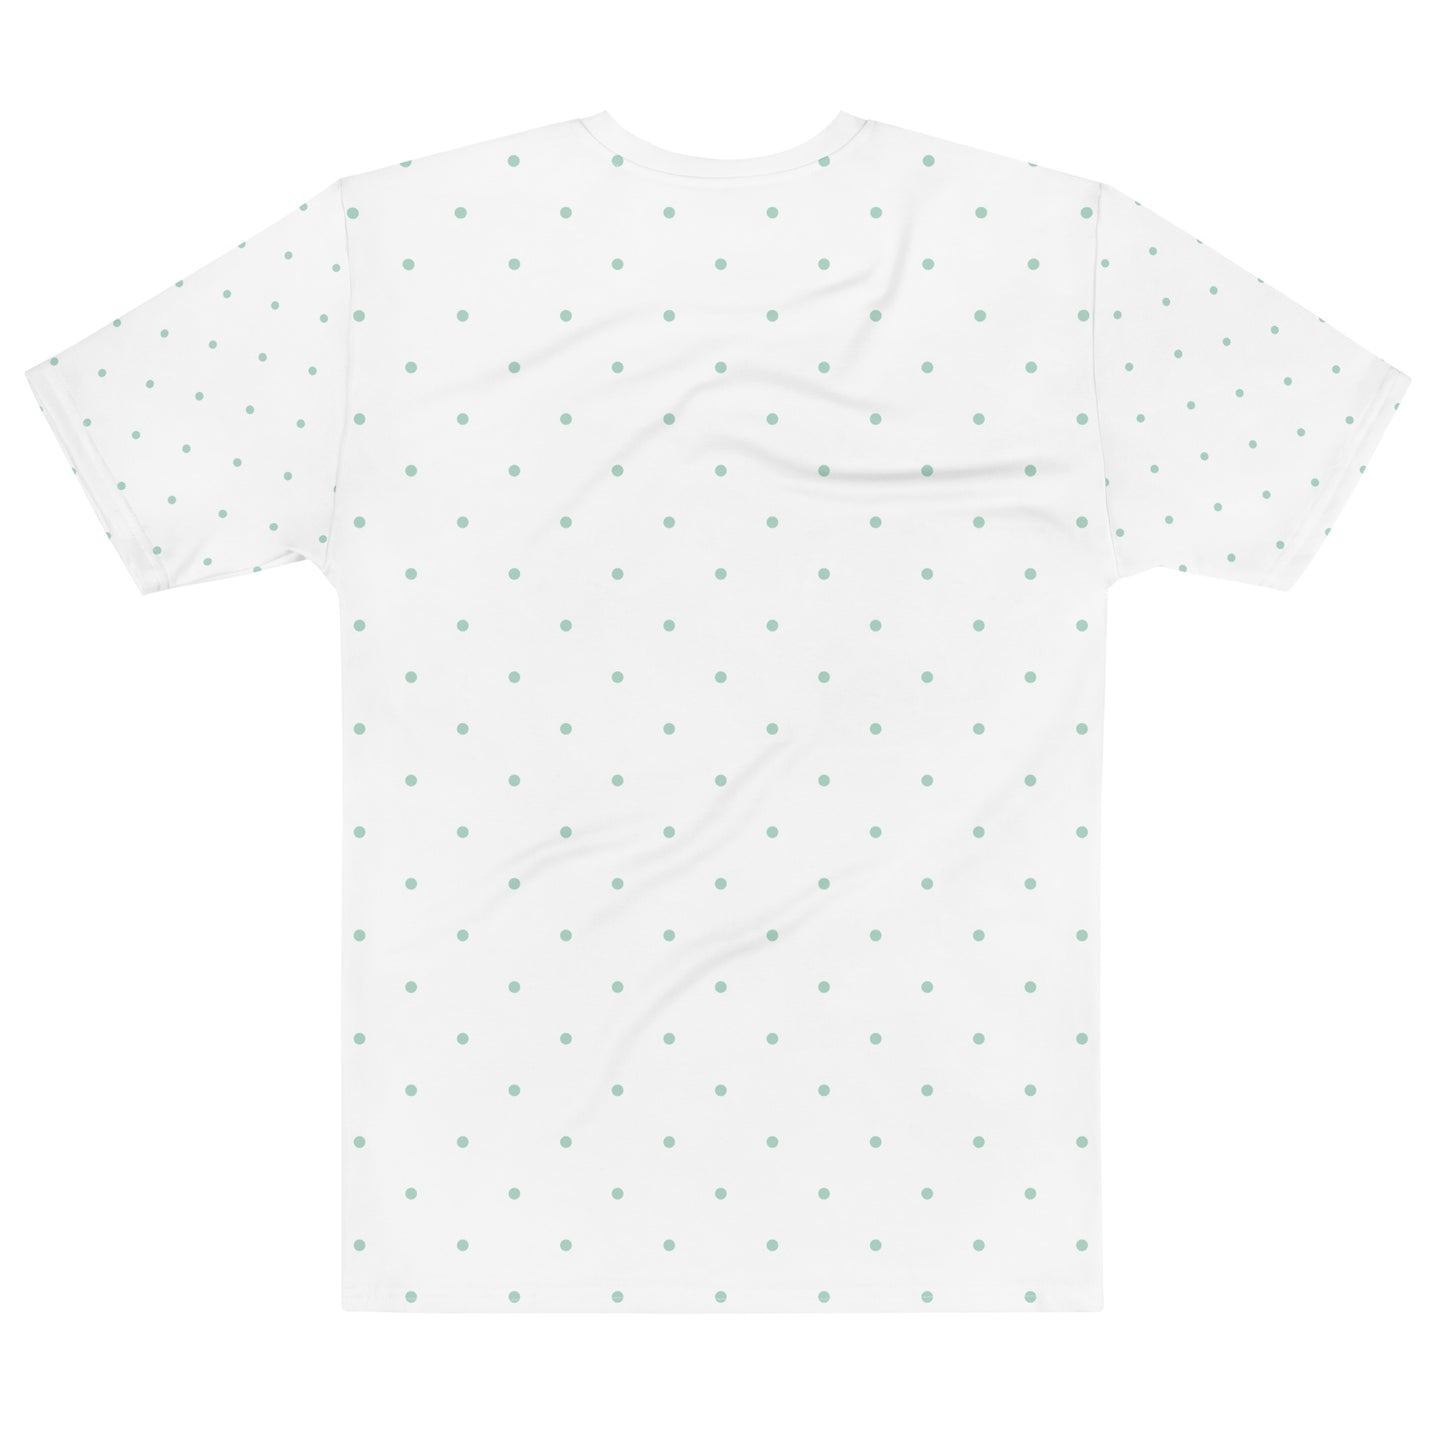 White Dots - Sustainably Made Men's Short Sleeve Tee